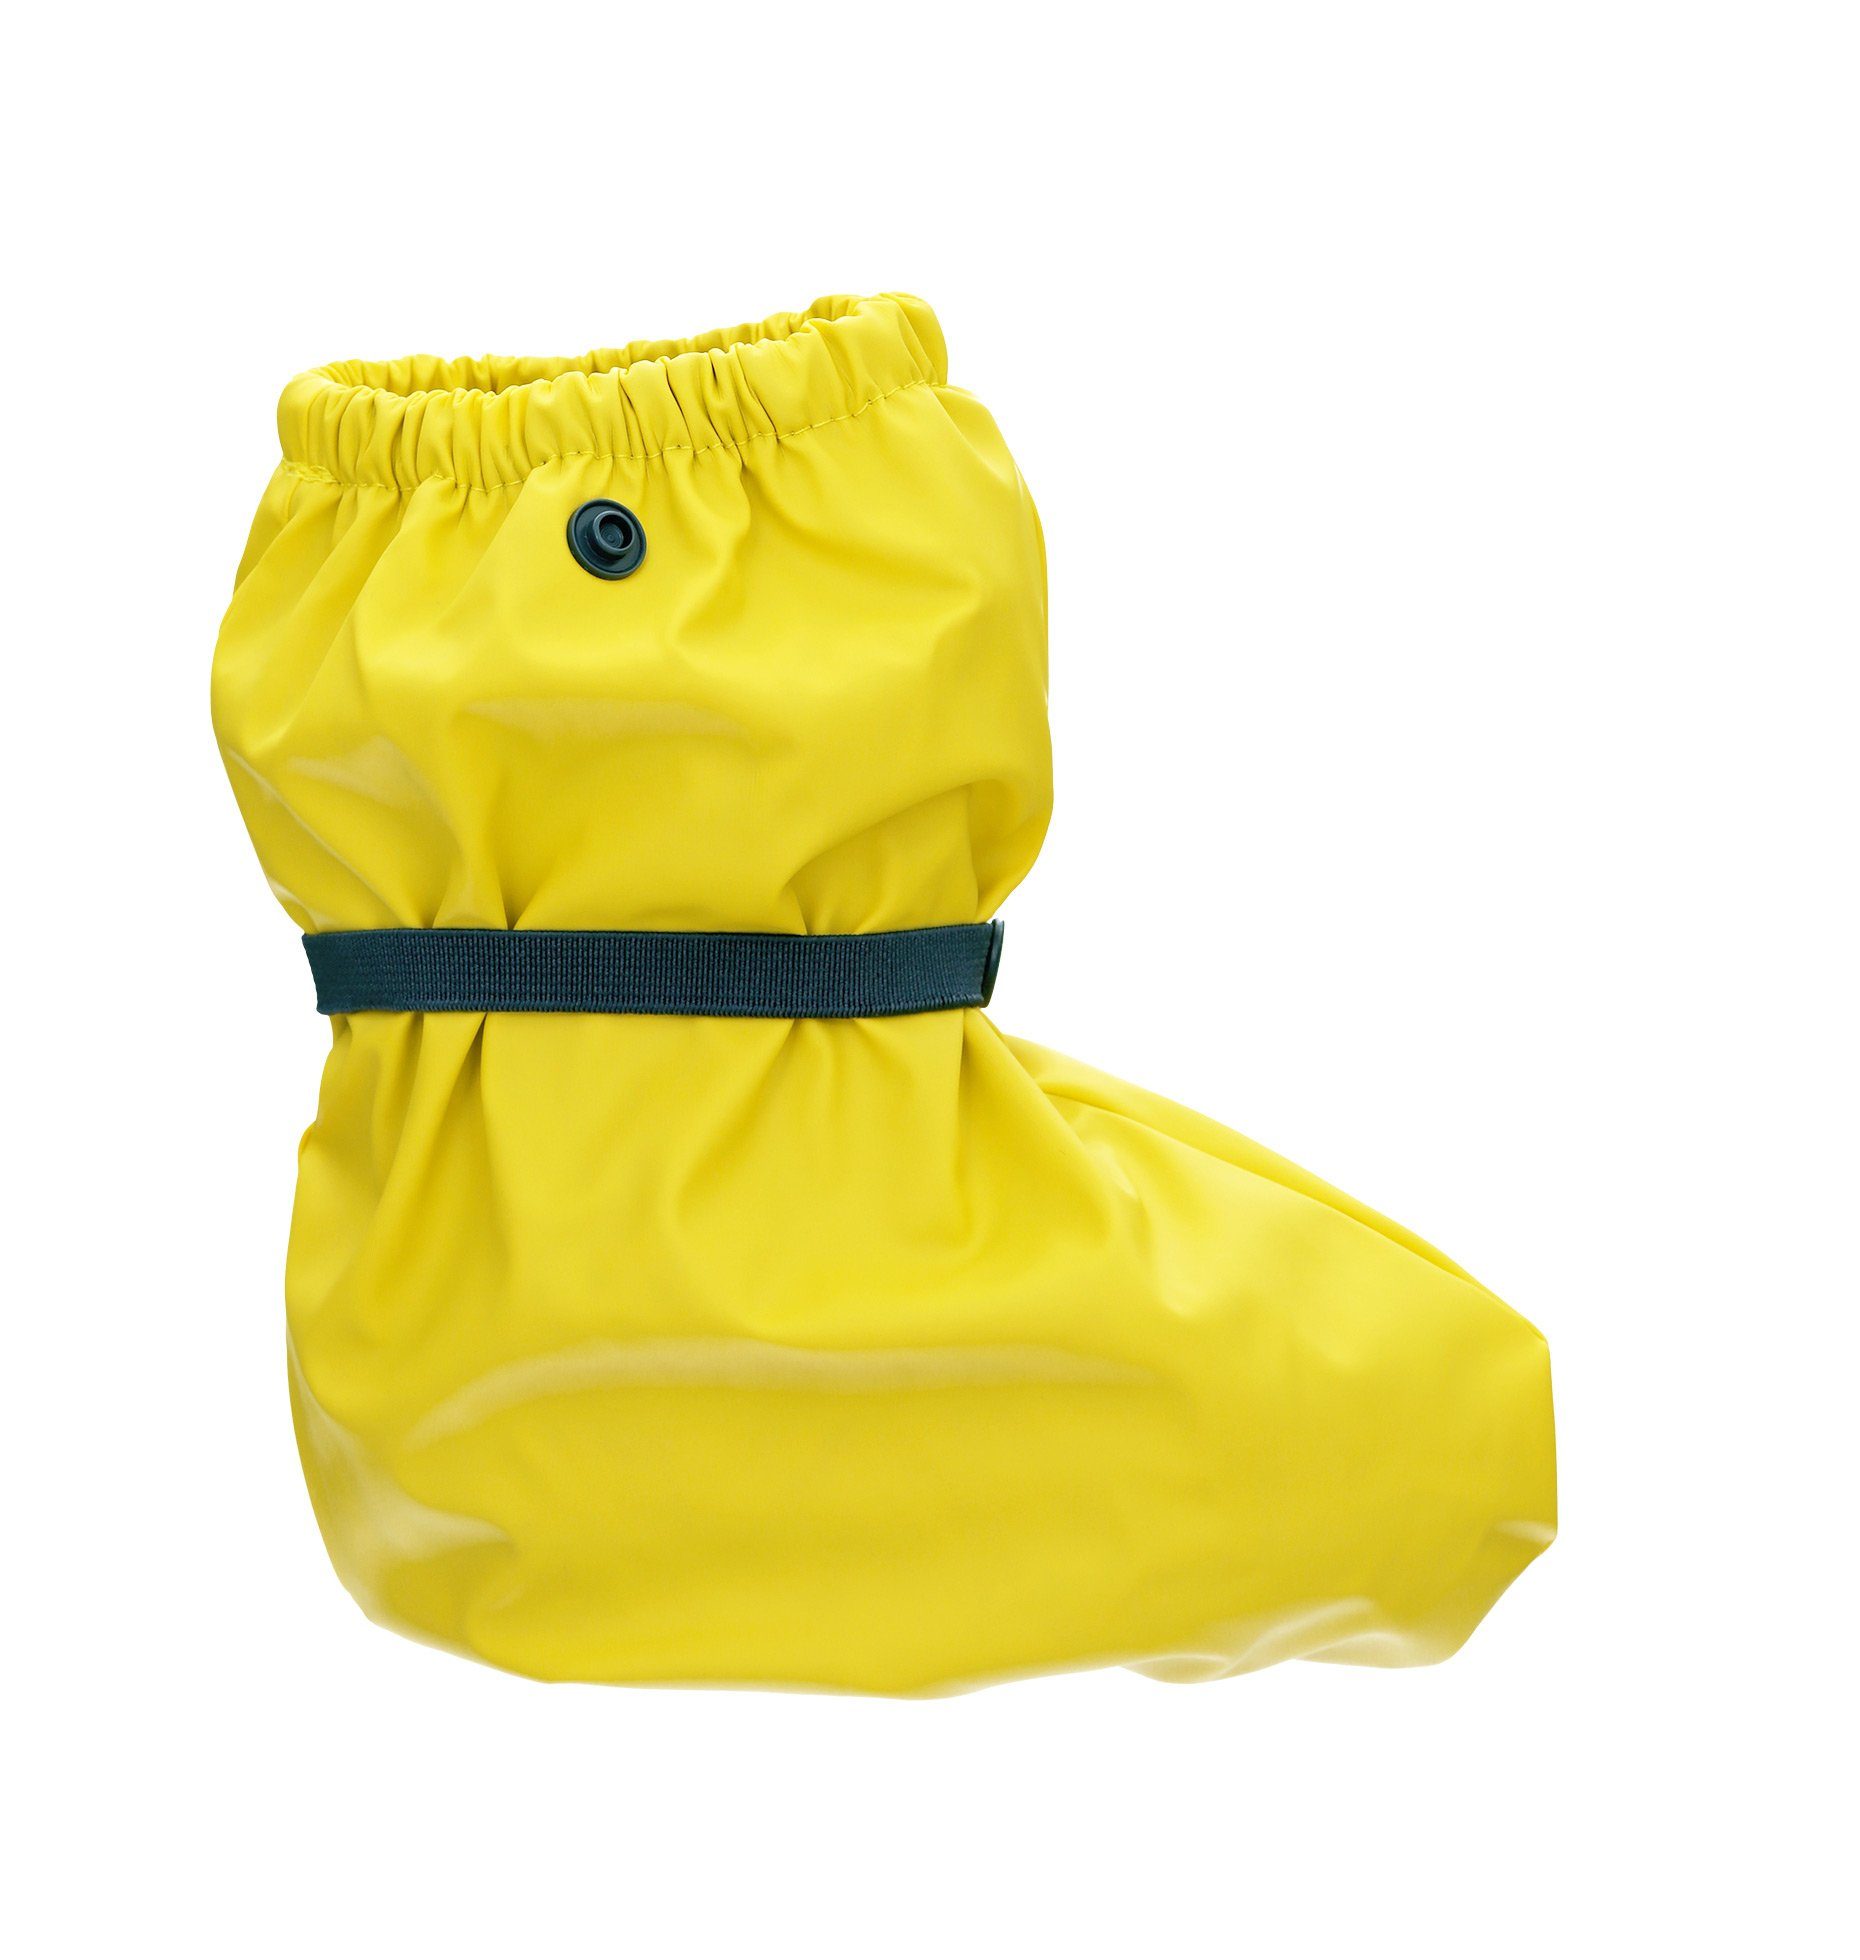 Playshoes Füßlinge Regenfüßlinge Fleece-Futter Gelb mit